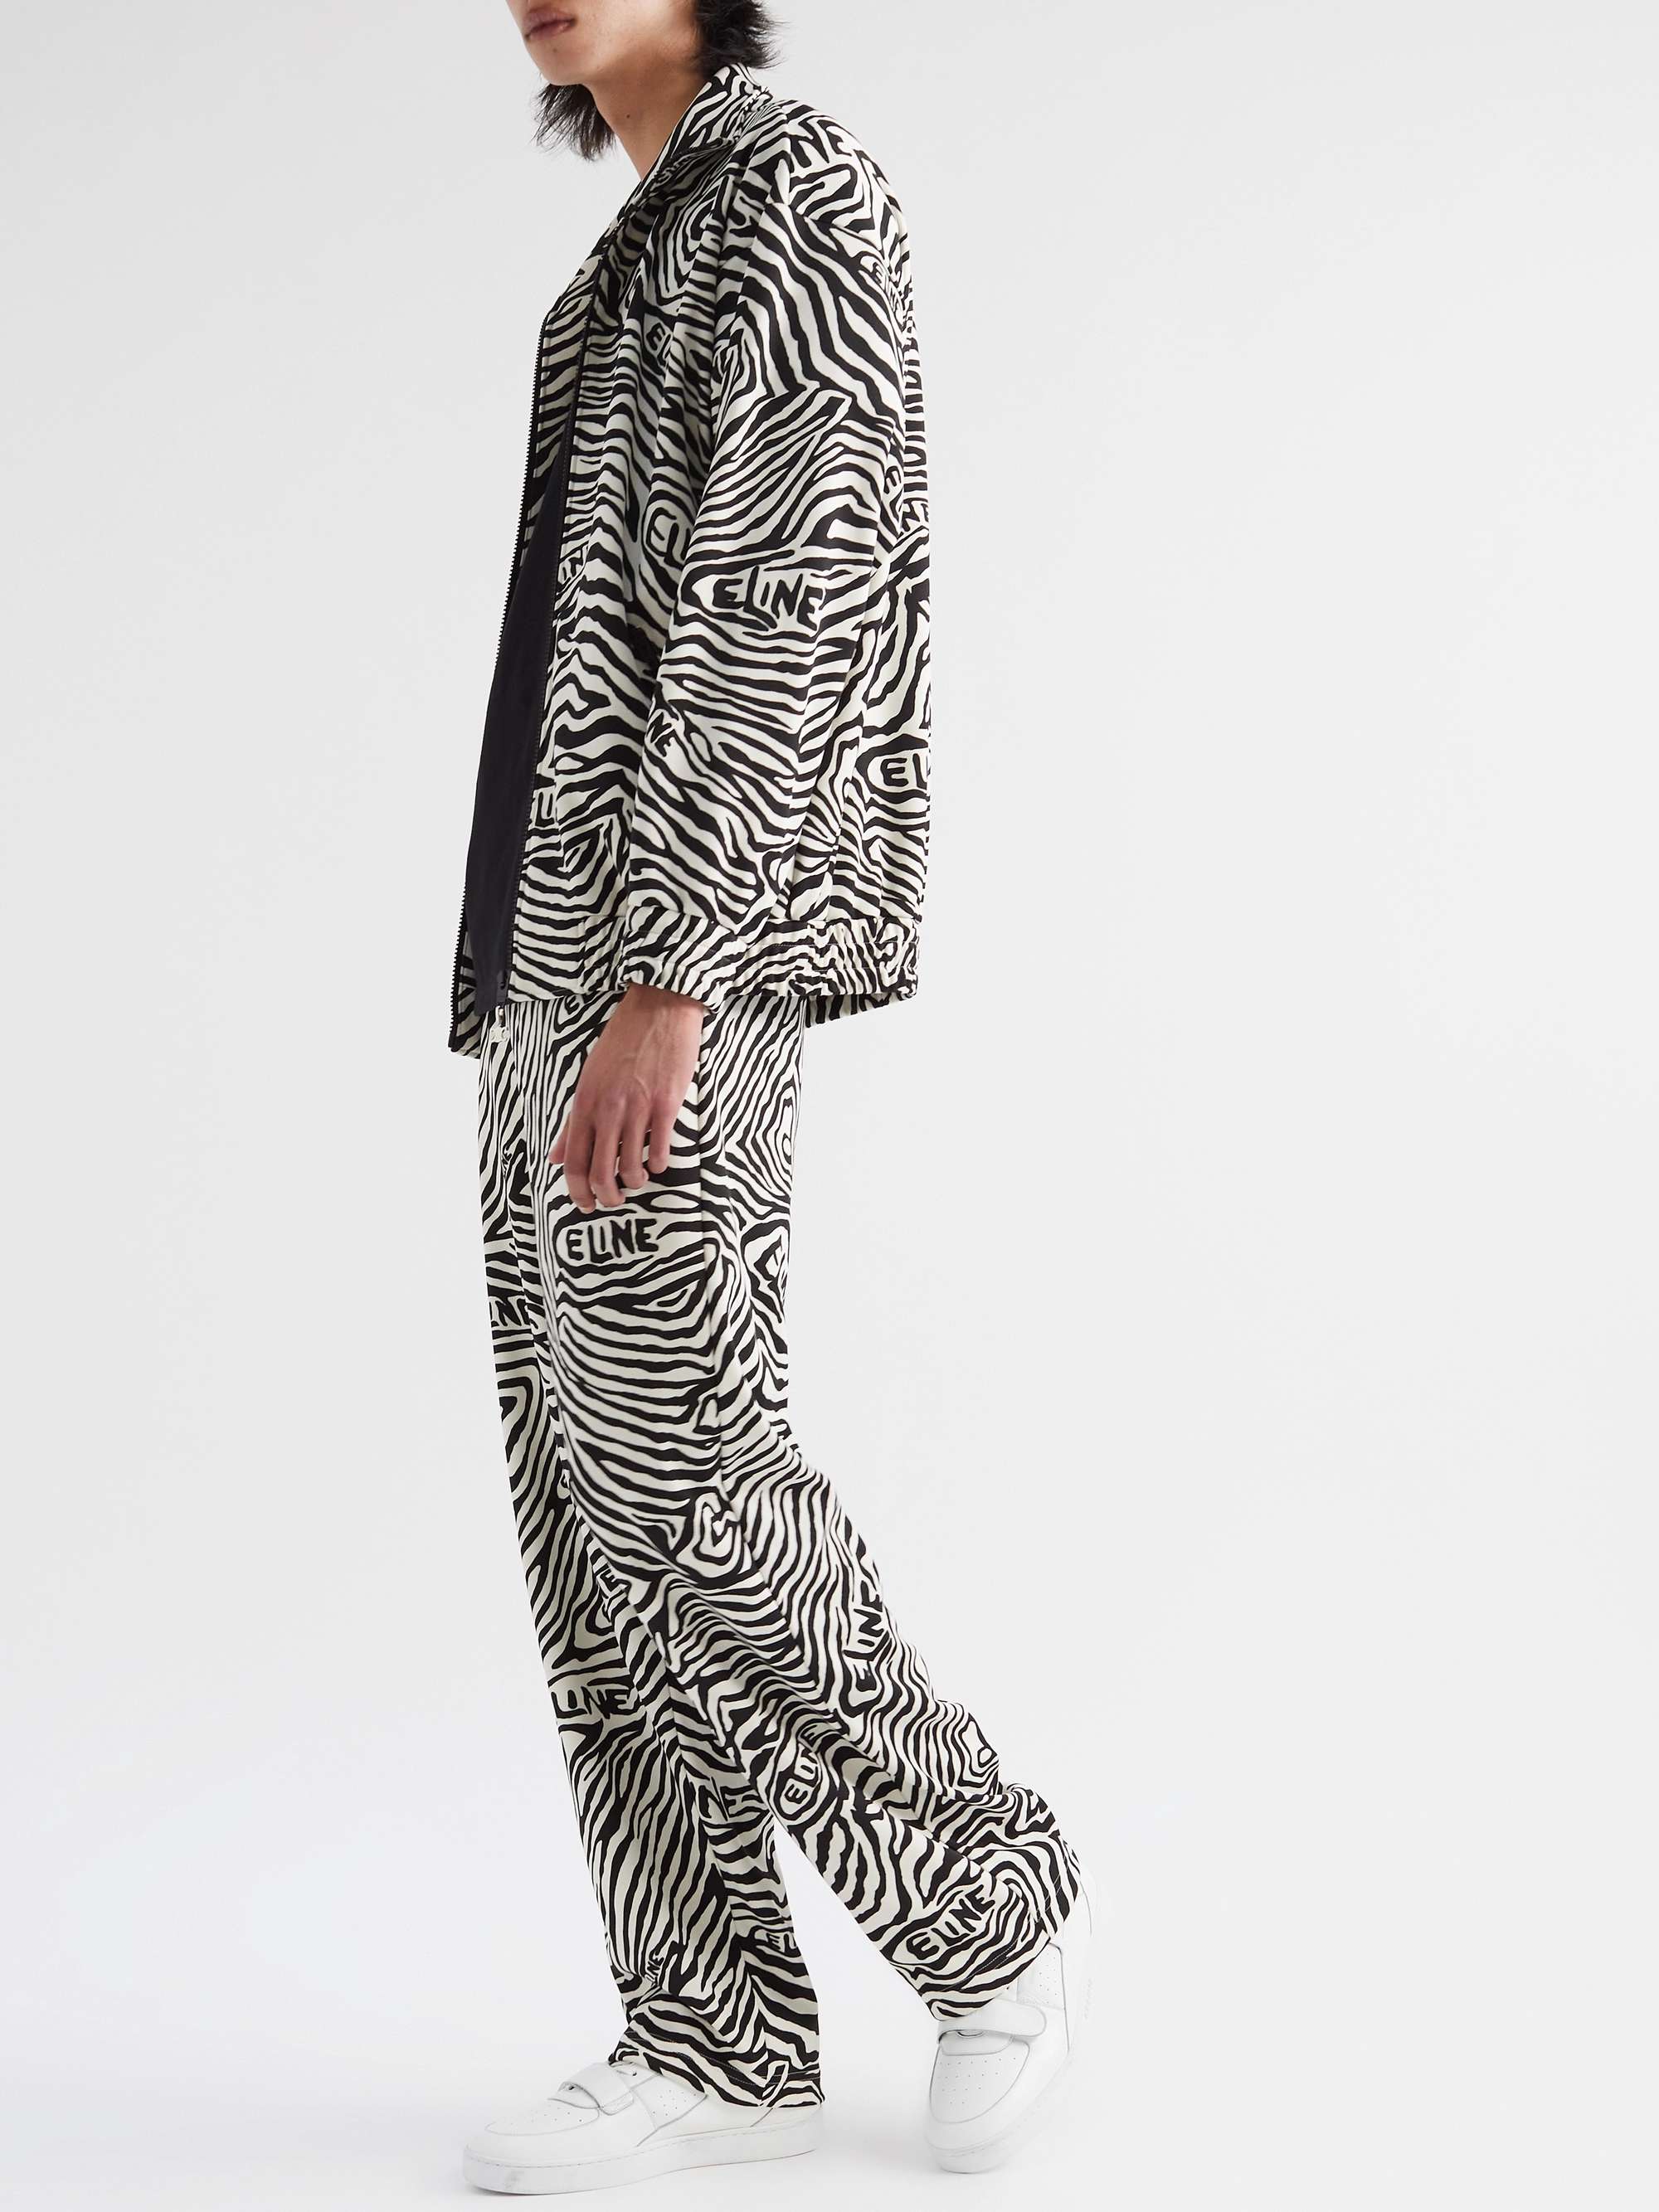 CELINE HOMME Zebra-Print Jersey Sweatpants | MR PORTER